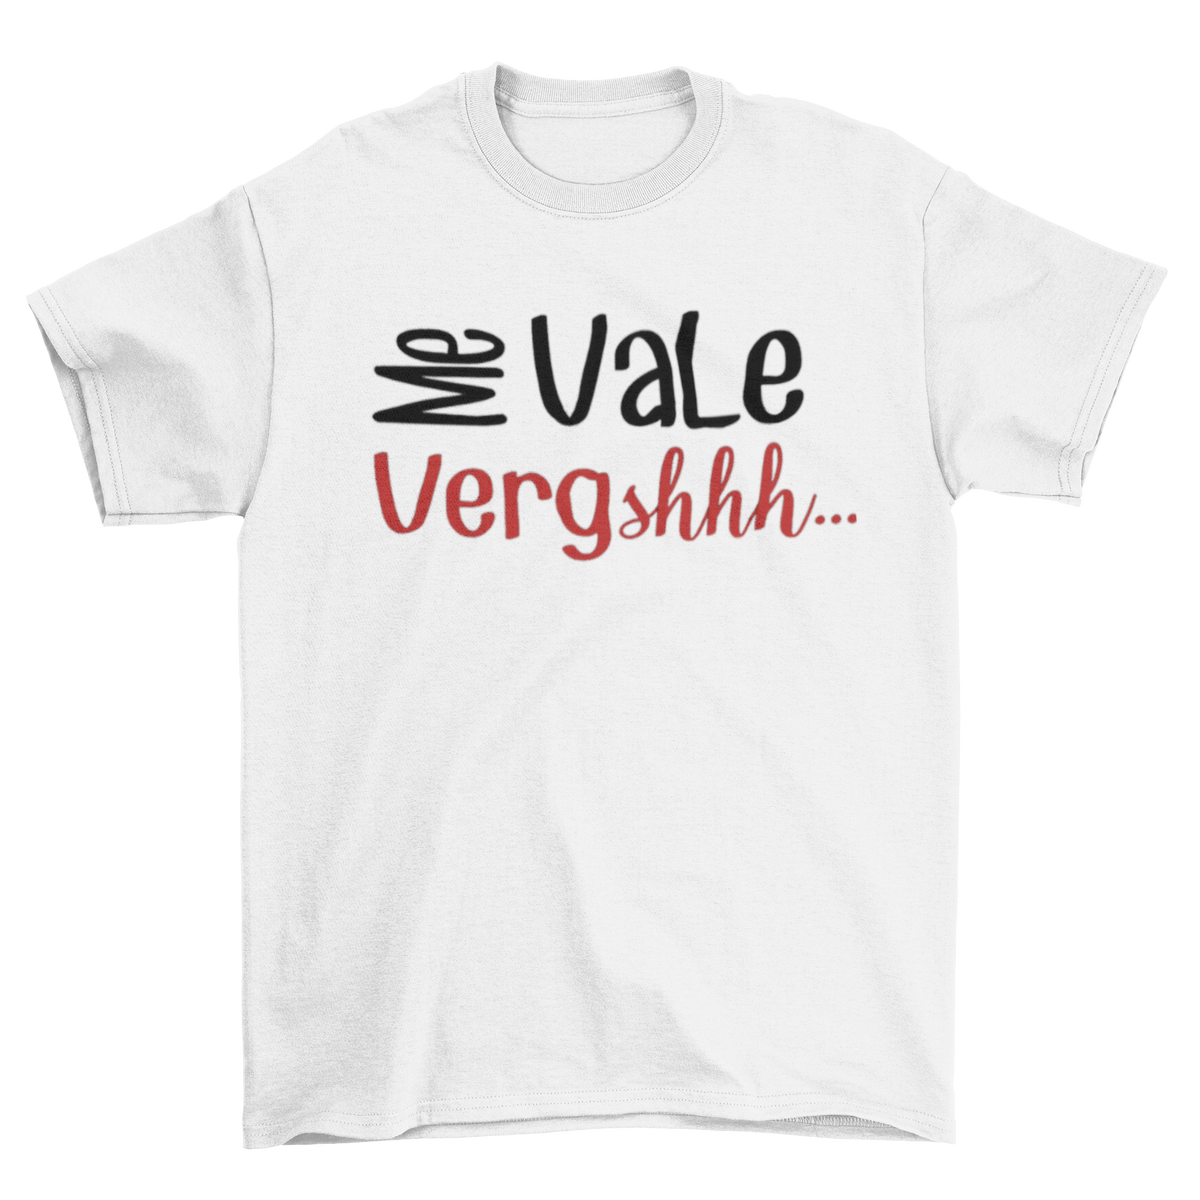 Me vale Vergshhh - T-shirt Unisex